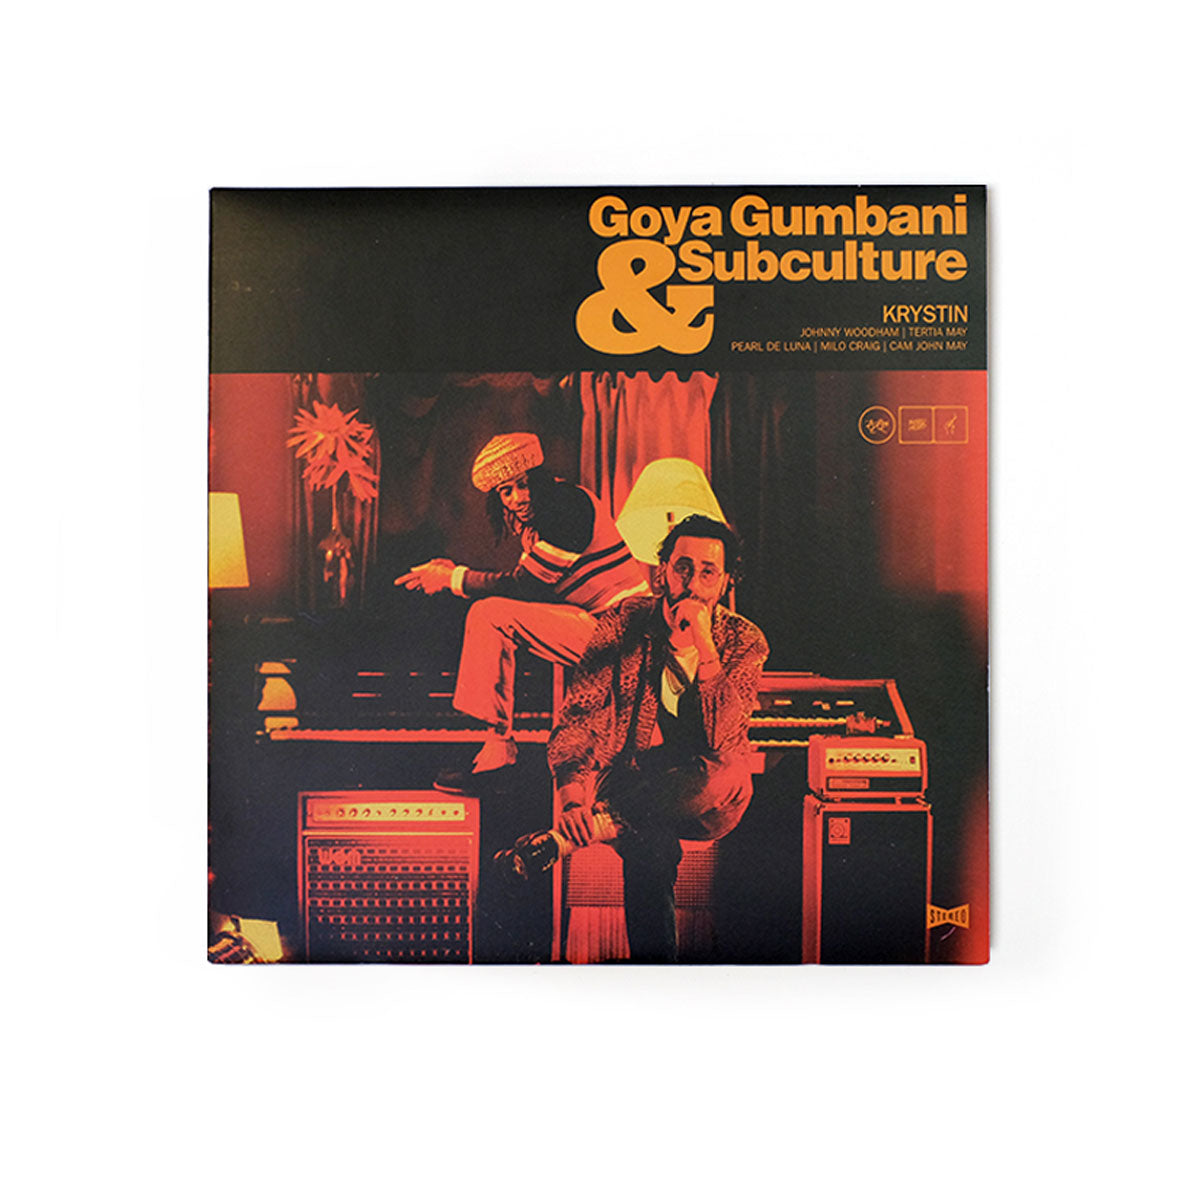 Goya Gumbani & Subculture  — Krystin